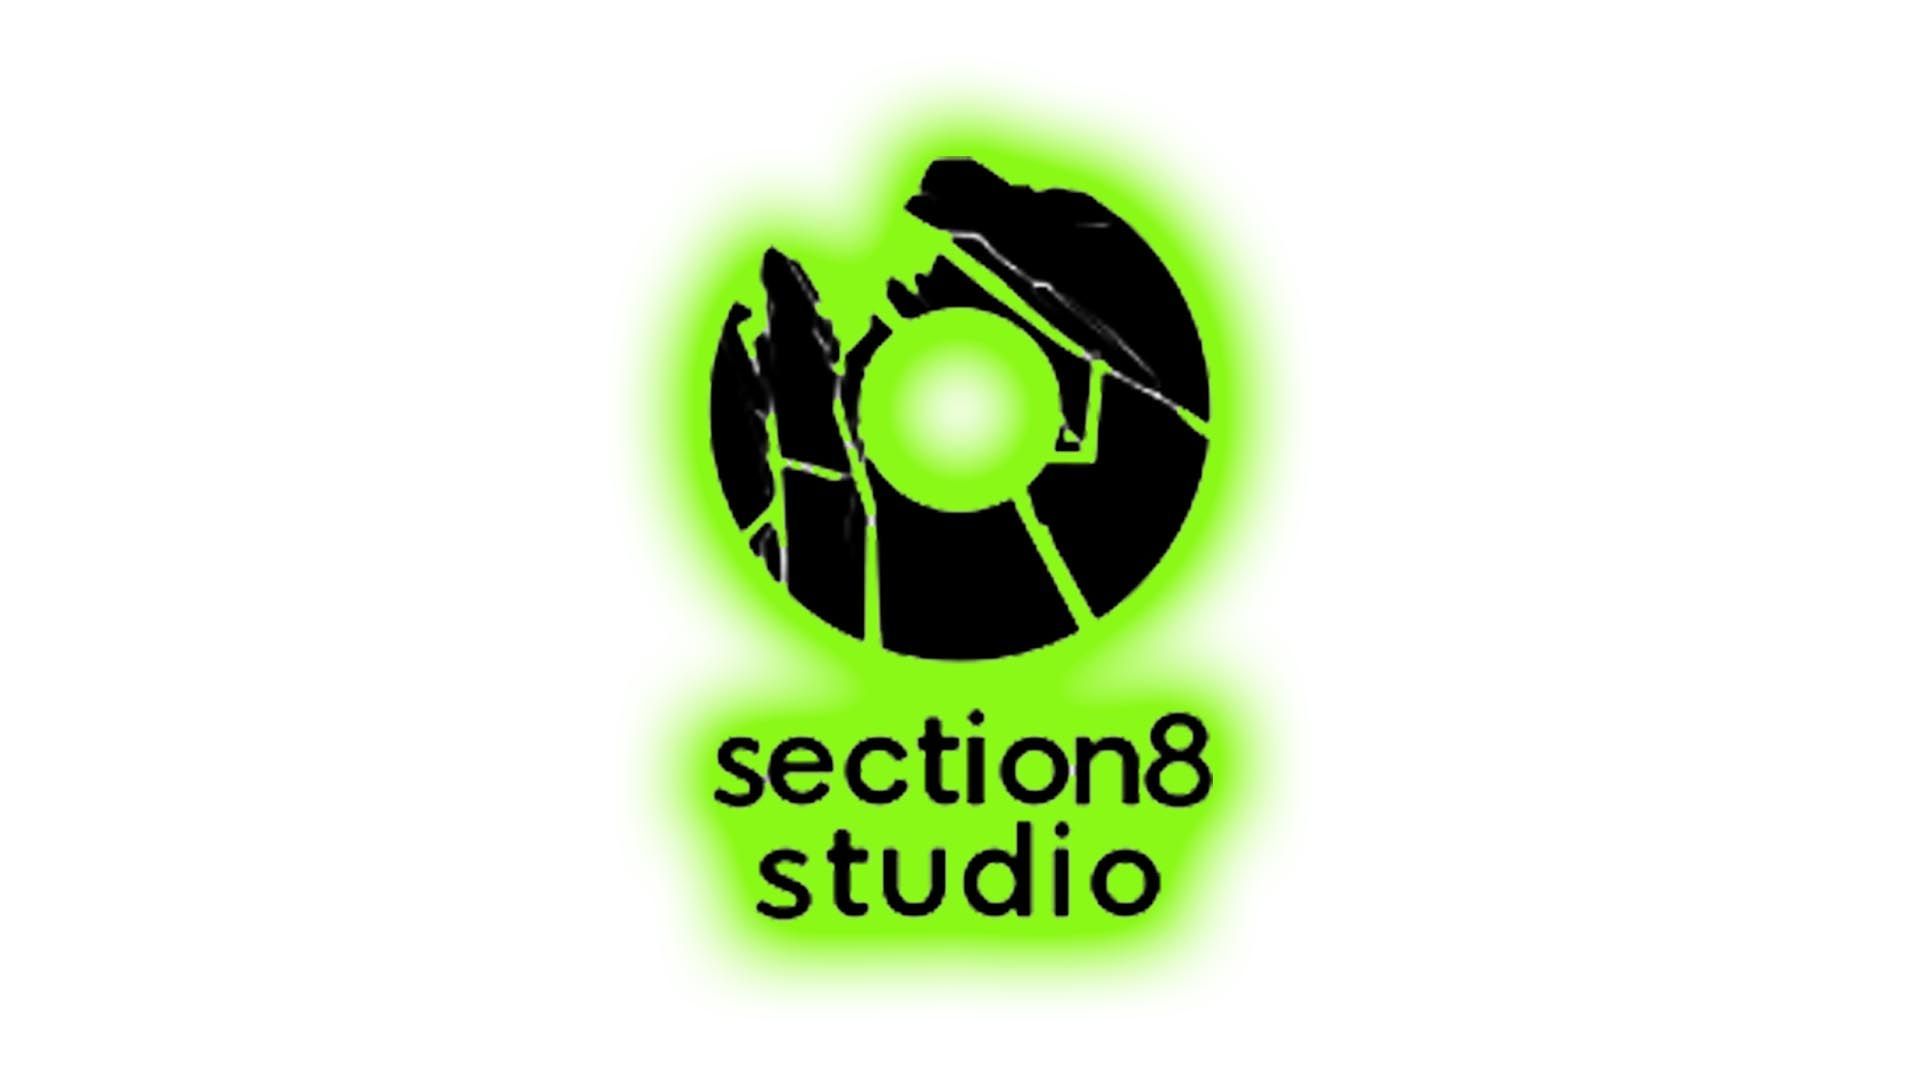 Section 8 Studio Provider Free Slot Machine Online Play